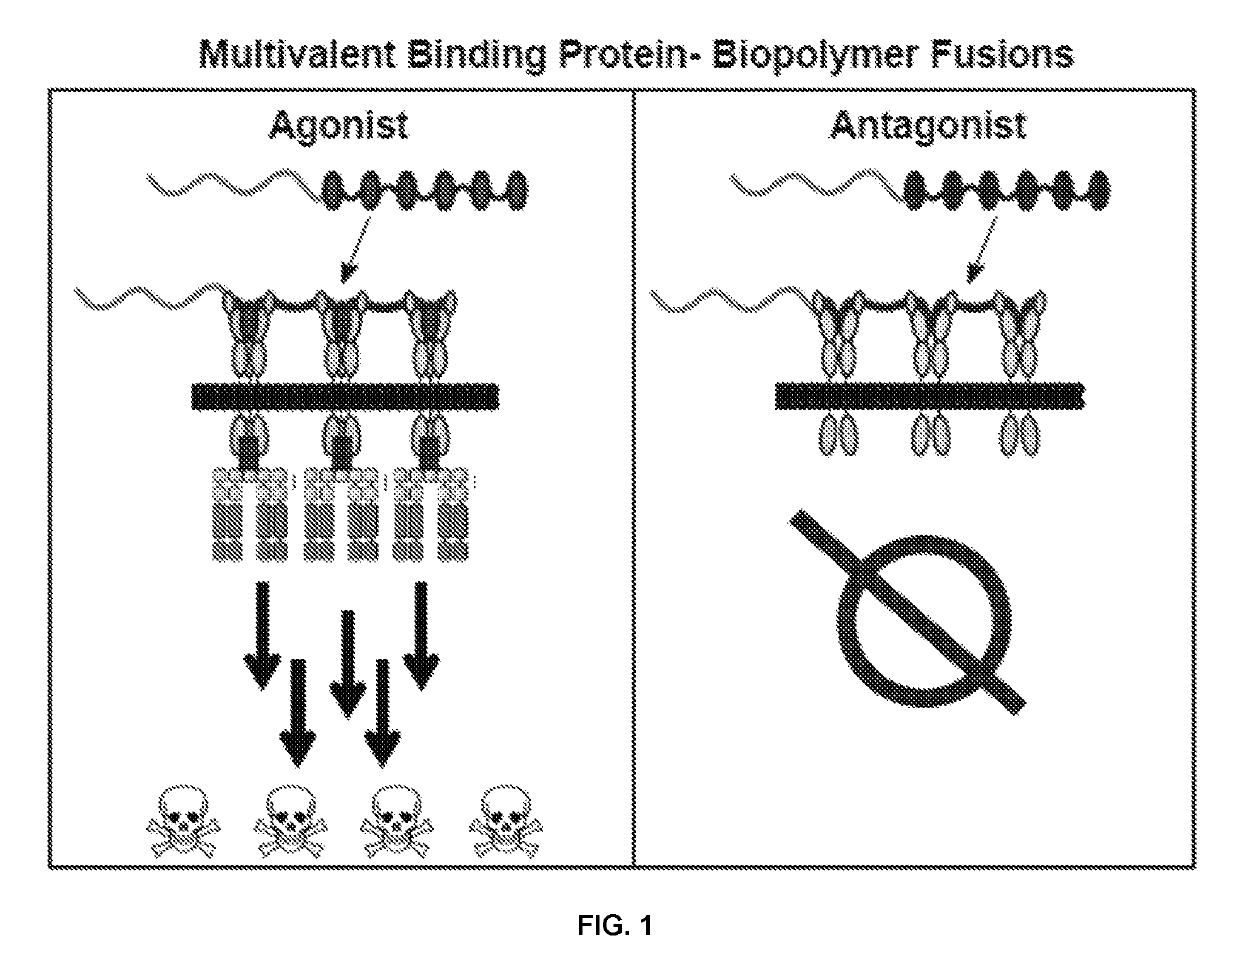 Fibronectin type III domain-based fusion proteins